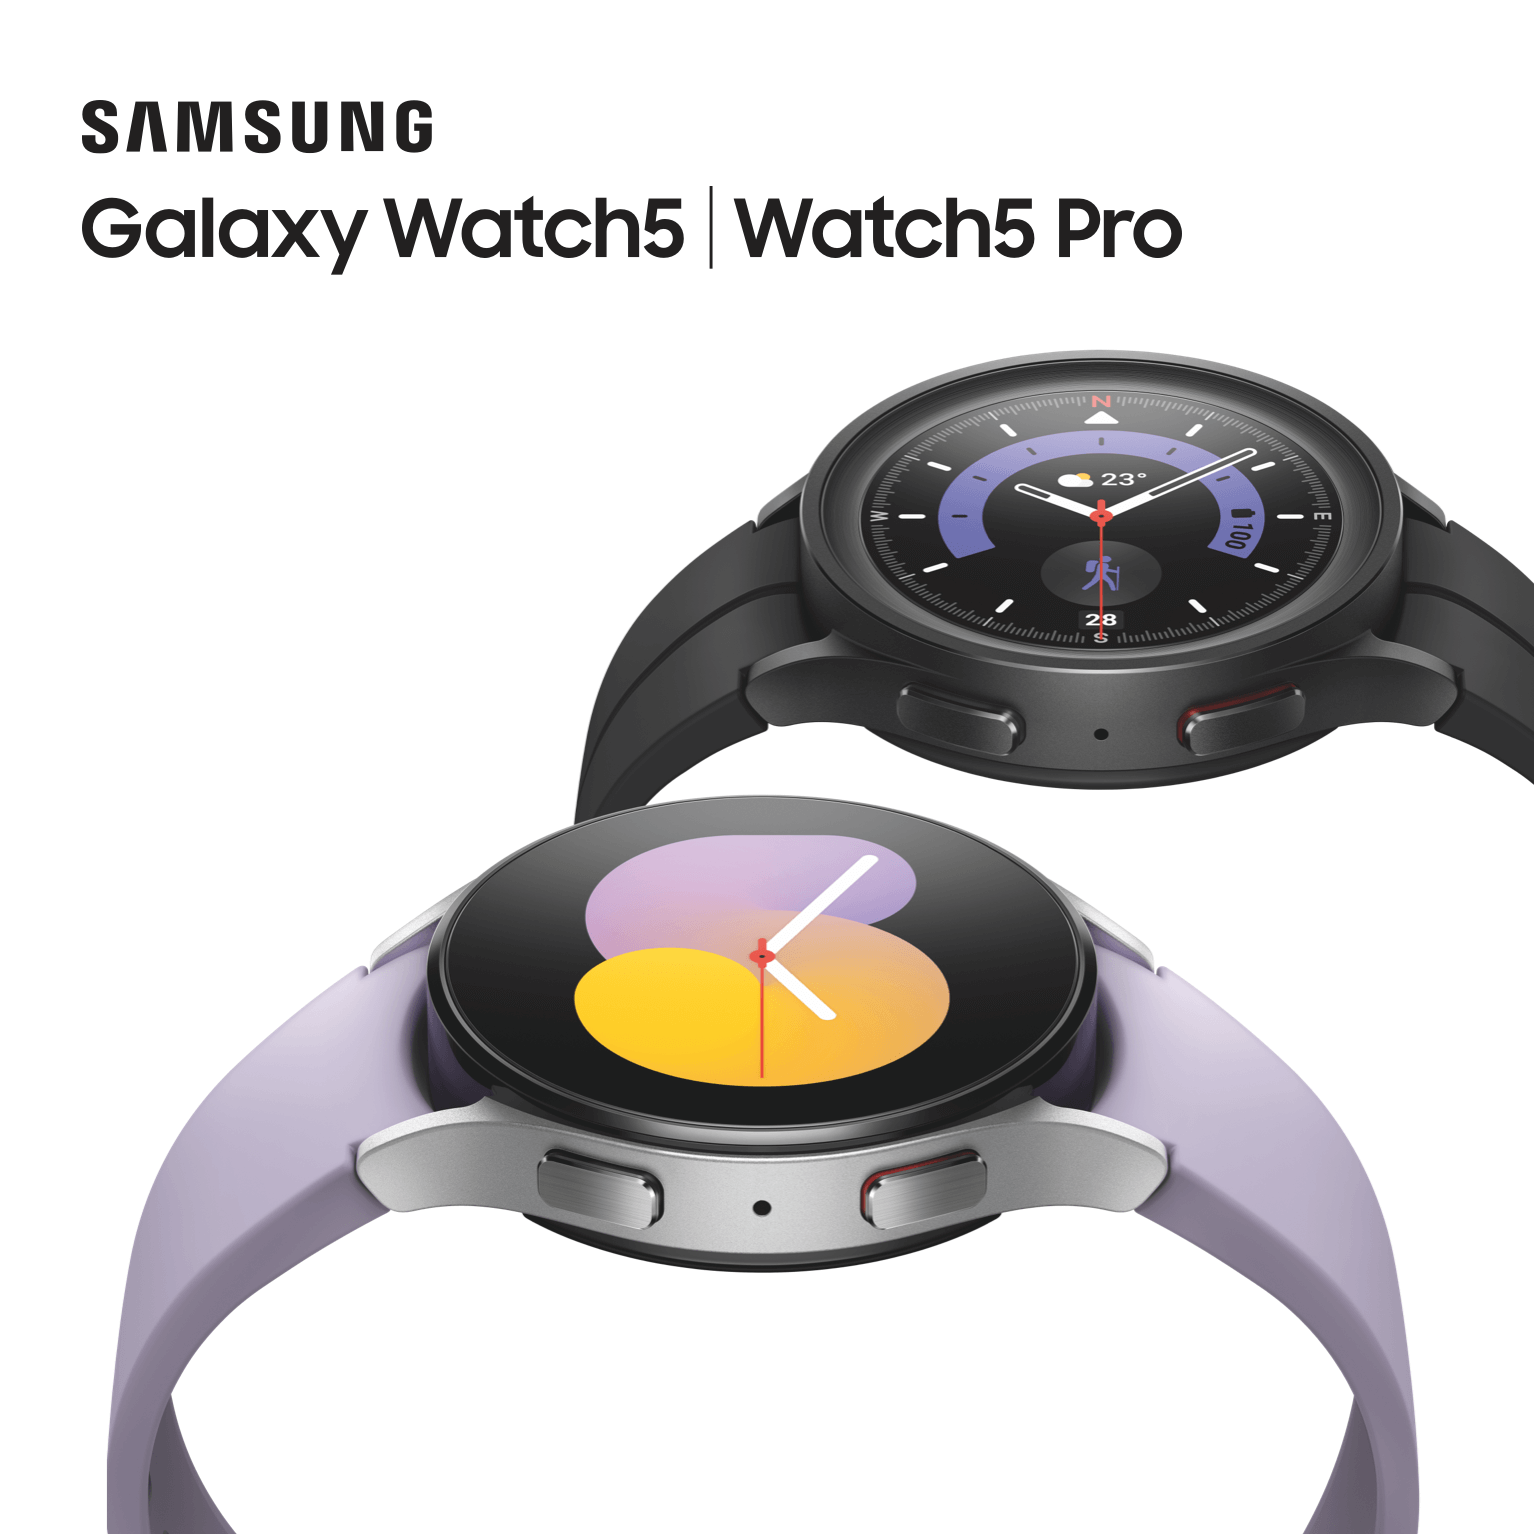 Samsung Galaxy Watch5 en Watch 5 Pro